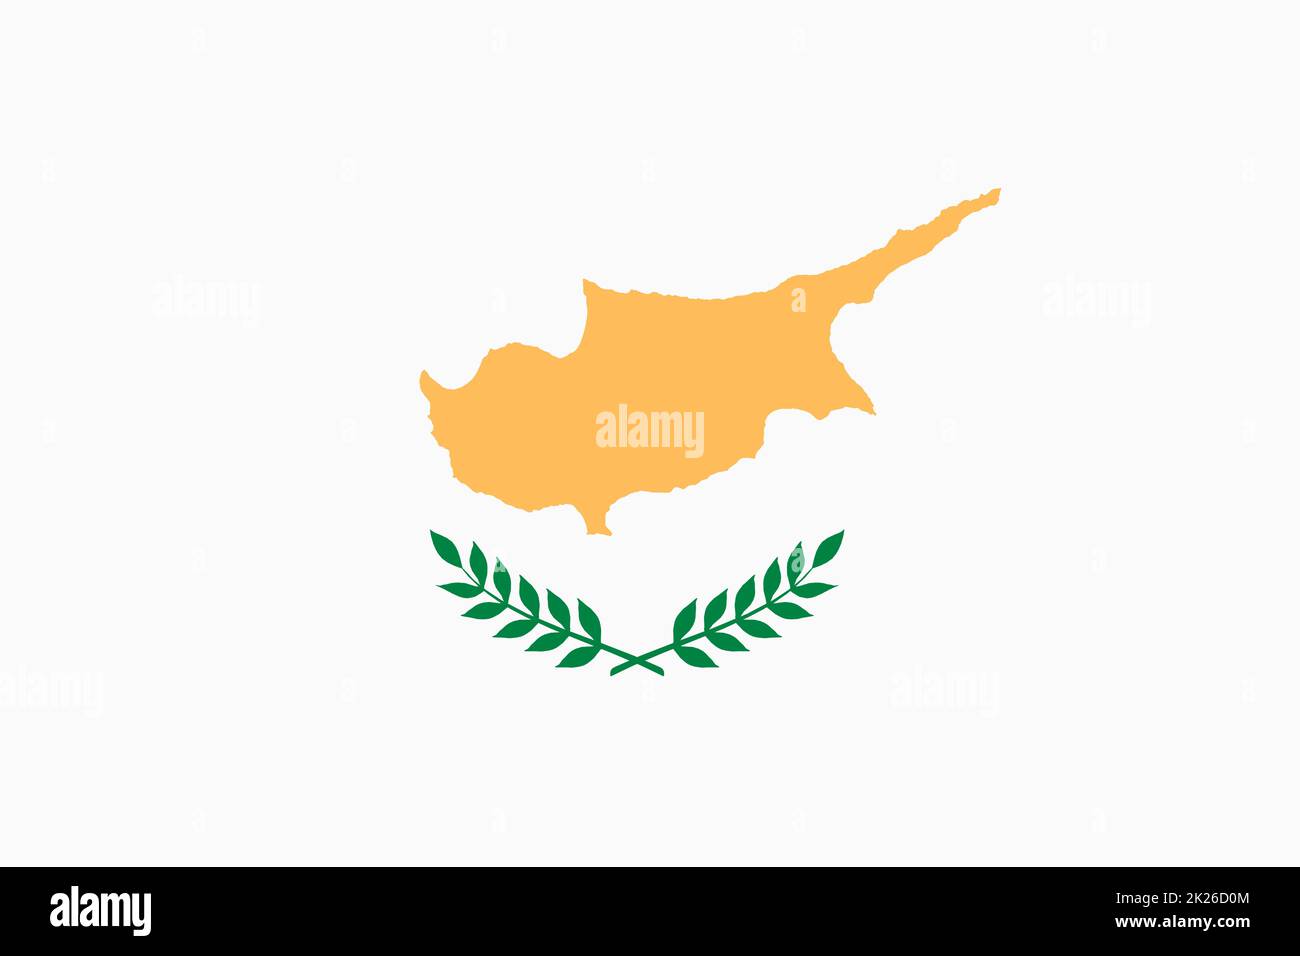 Cyprus flag background illustration white gold olive branch Stock Photo